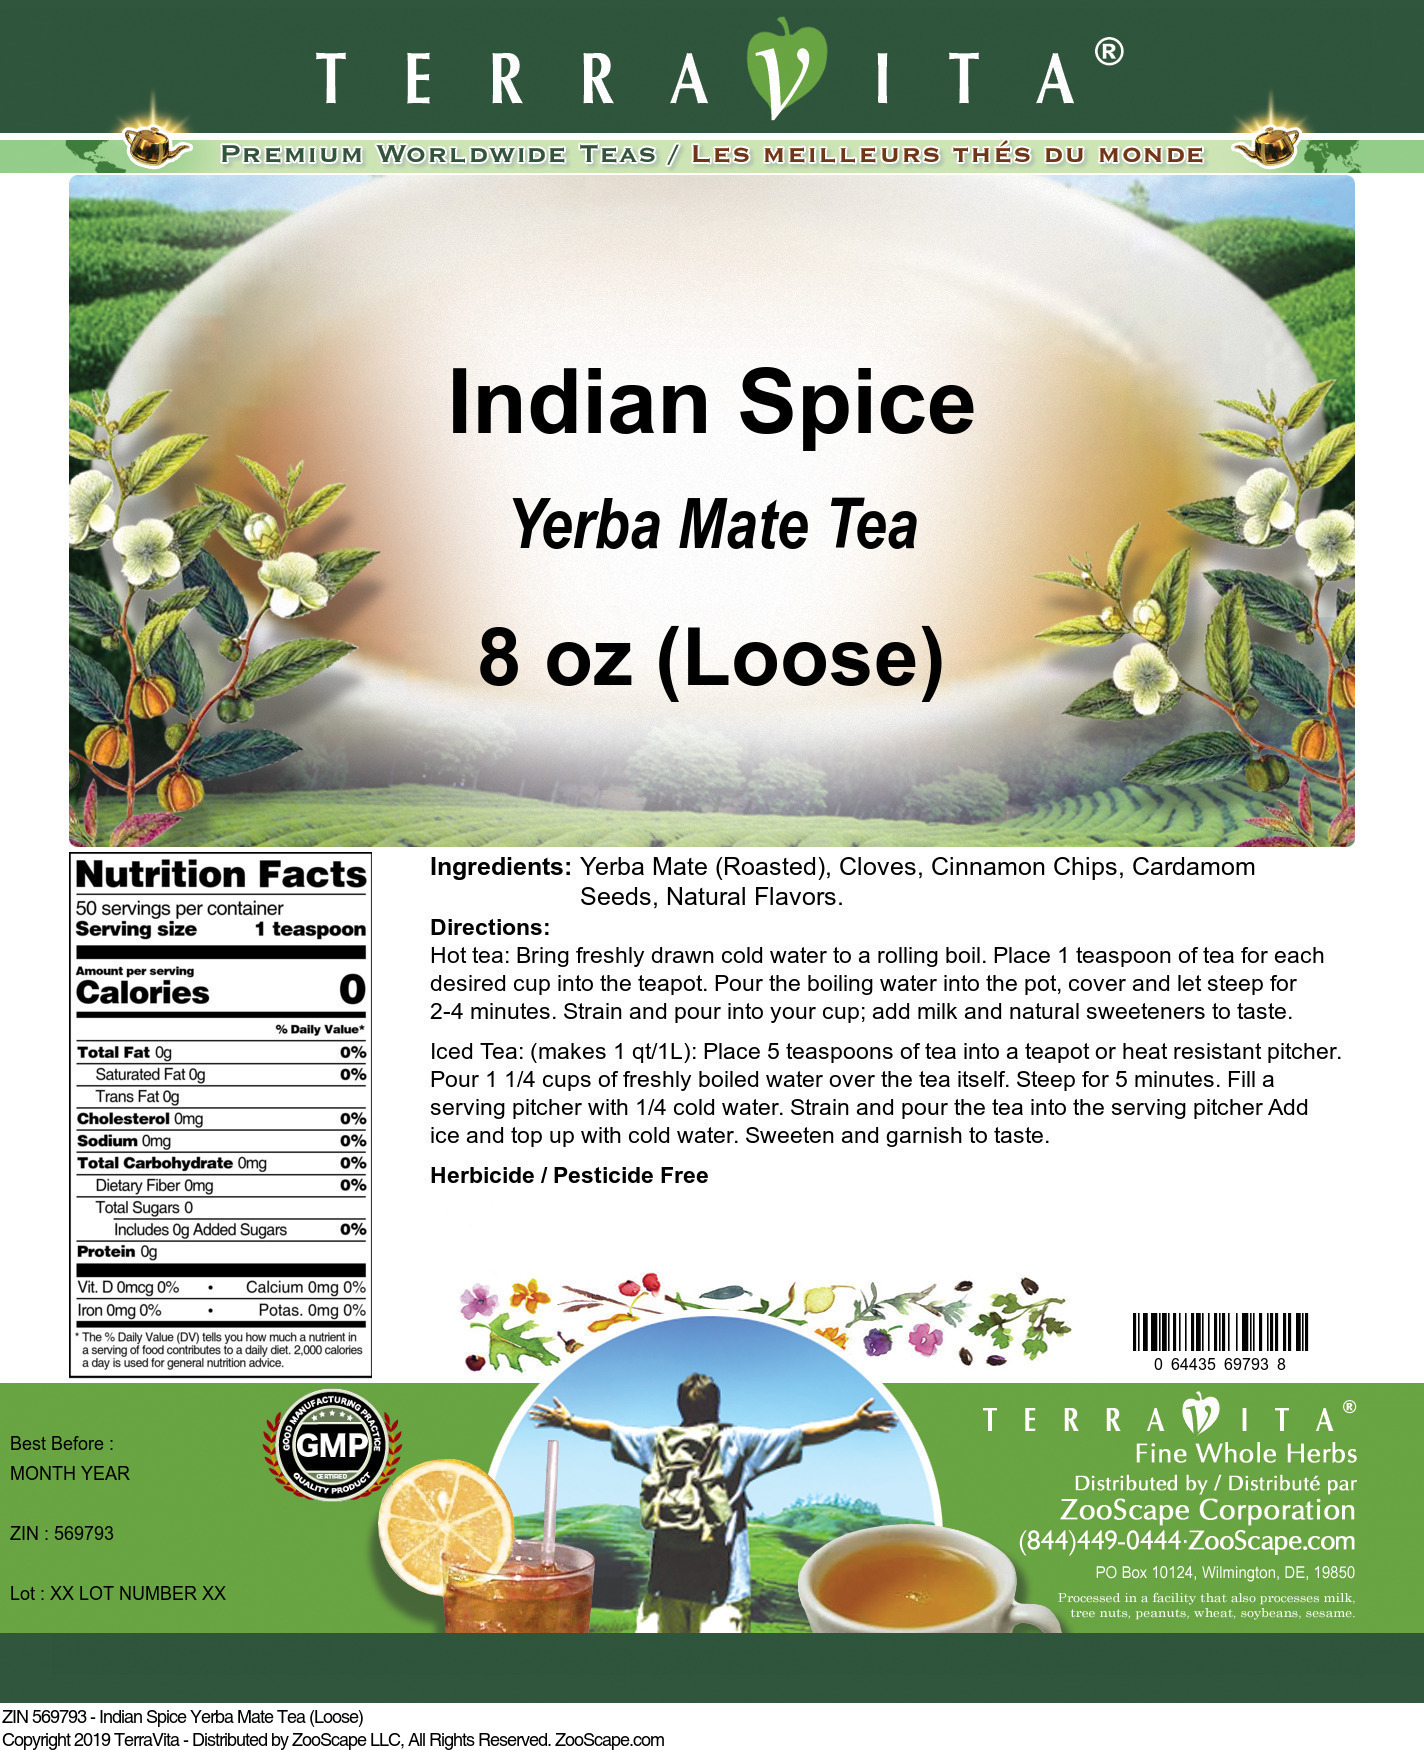 Indian Spice Yerba Mate Tea (Loose) - Label